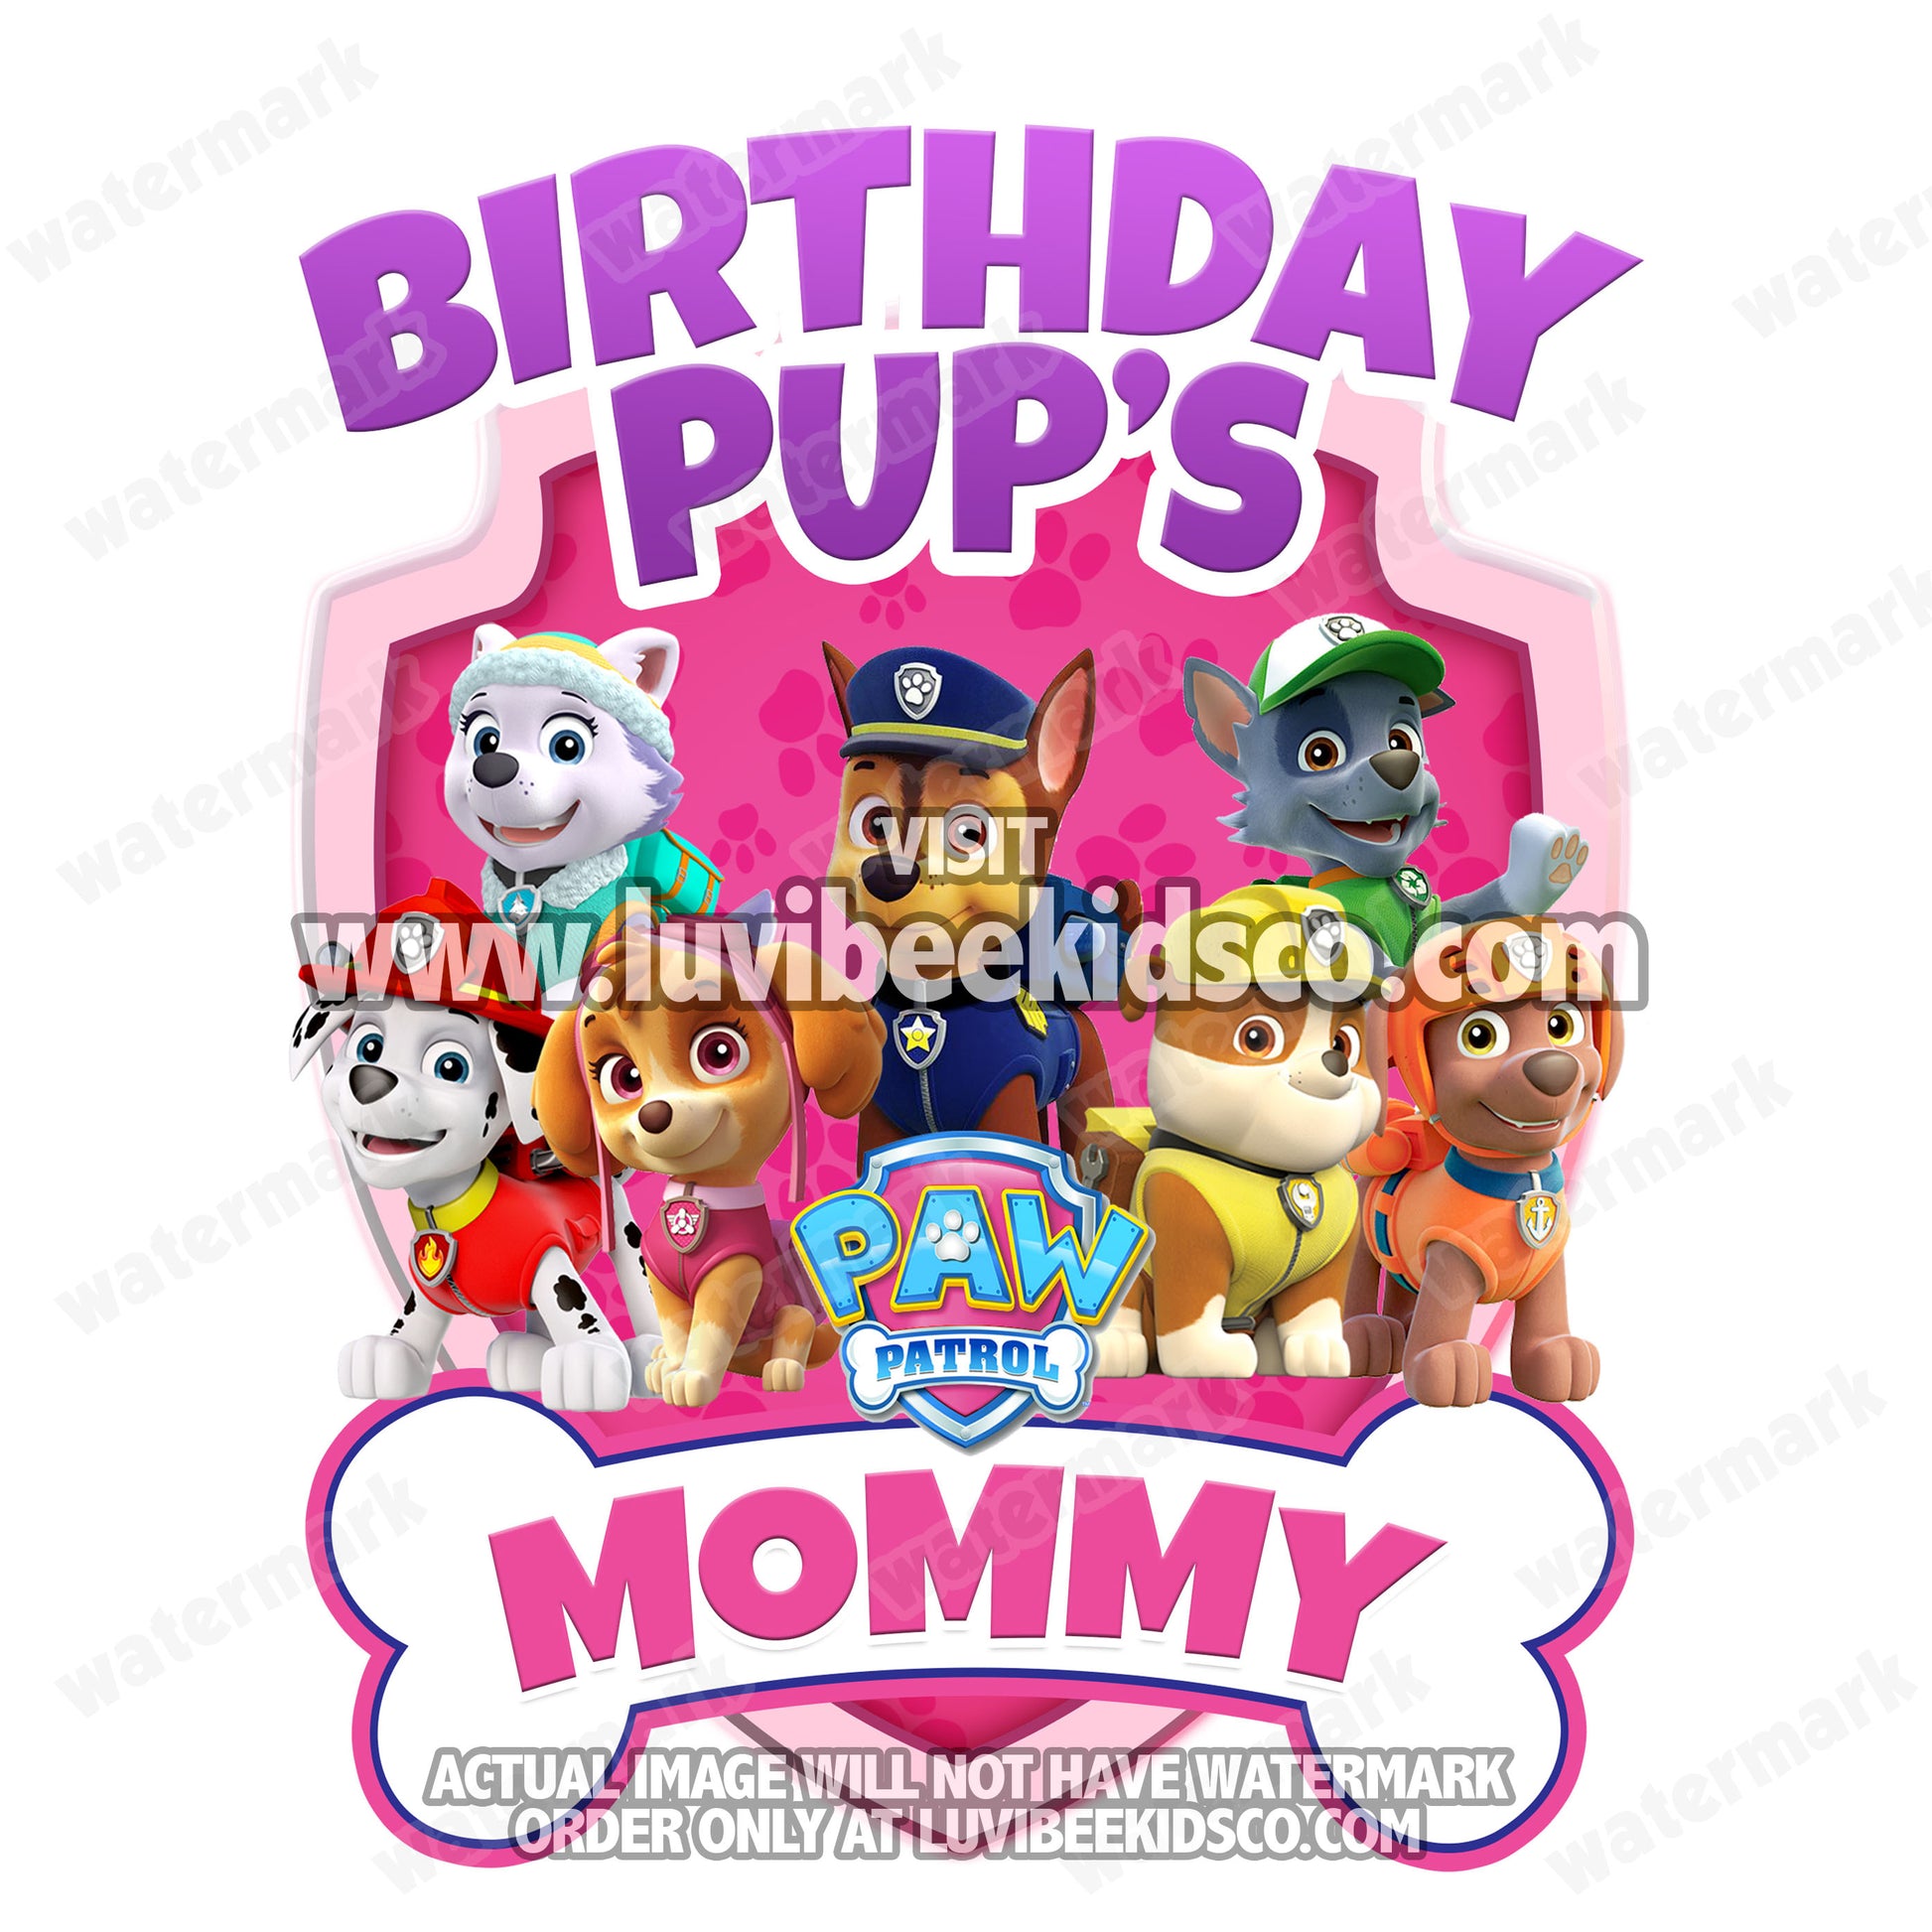 Paw Patrol Iron On Transfer - Pink Bone | Birthday Pup's Mommy - LuvibeeKidsCo